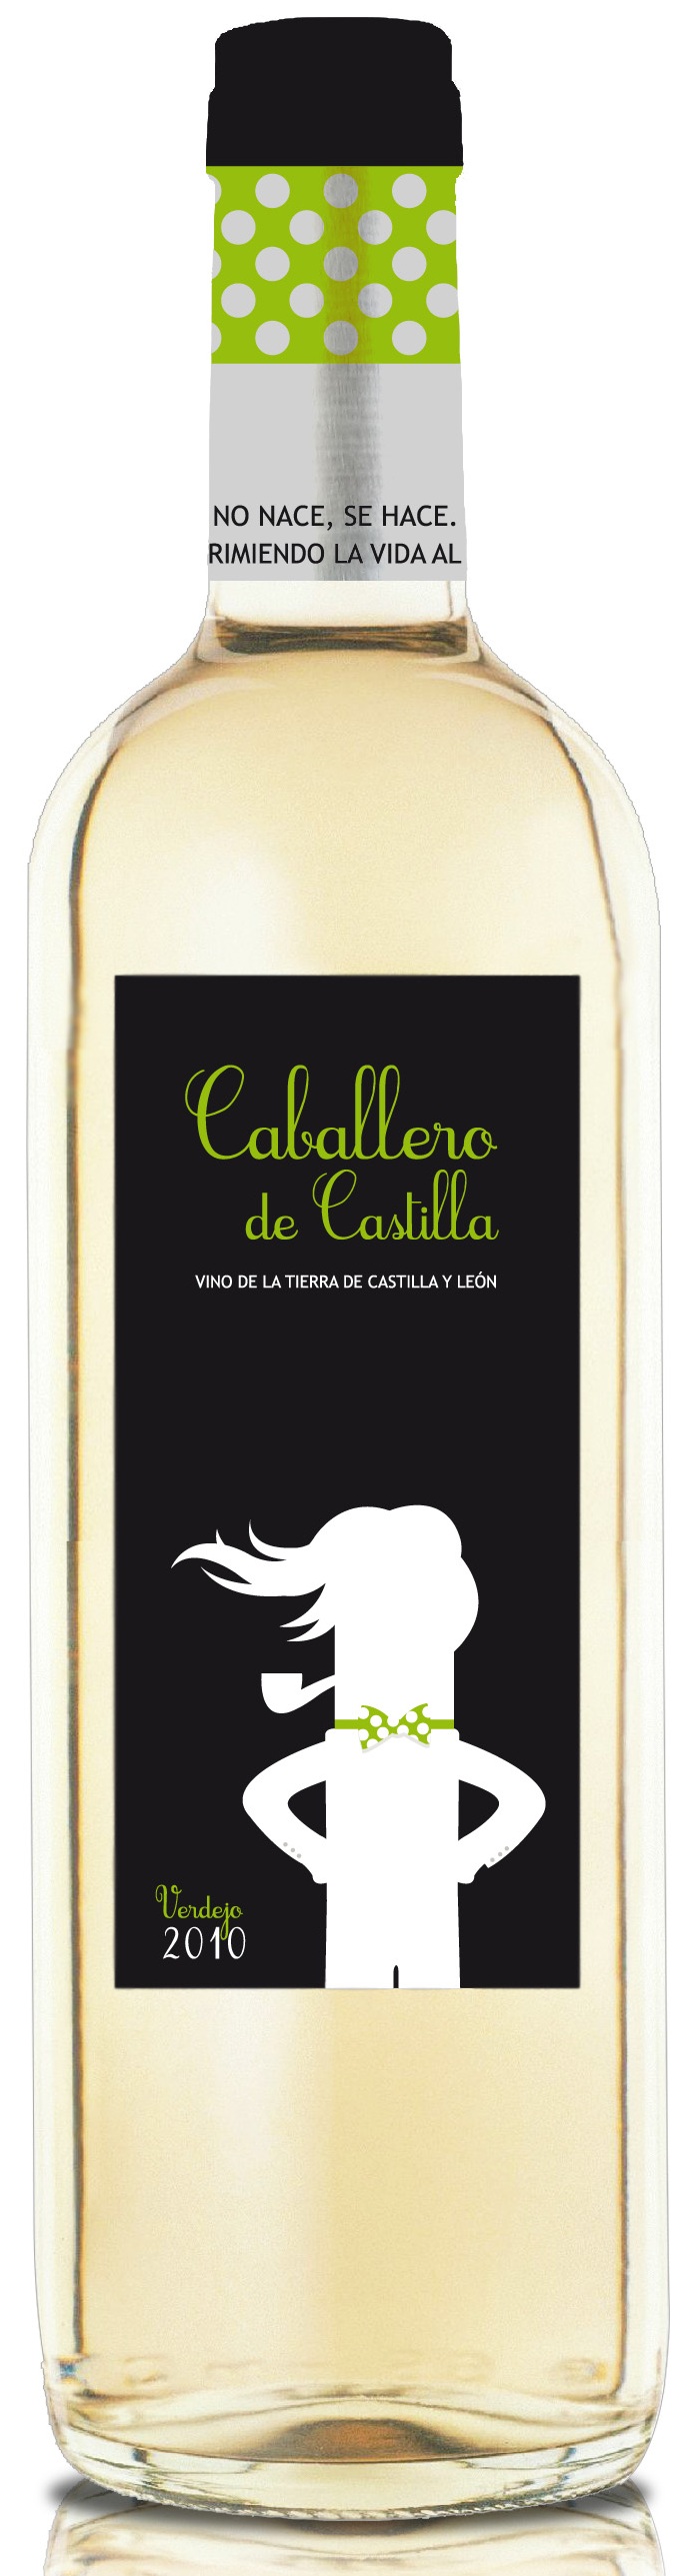 Image of Wine bottle Caballero de Castilla Verdejo